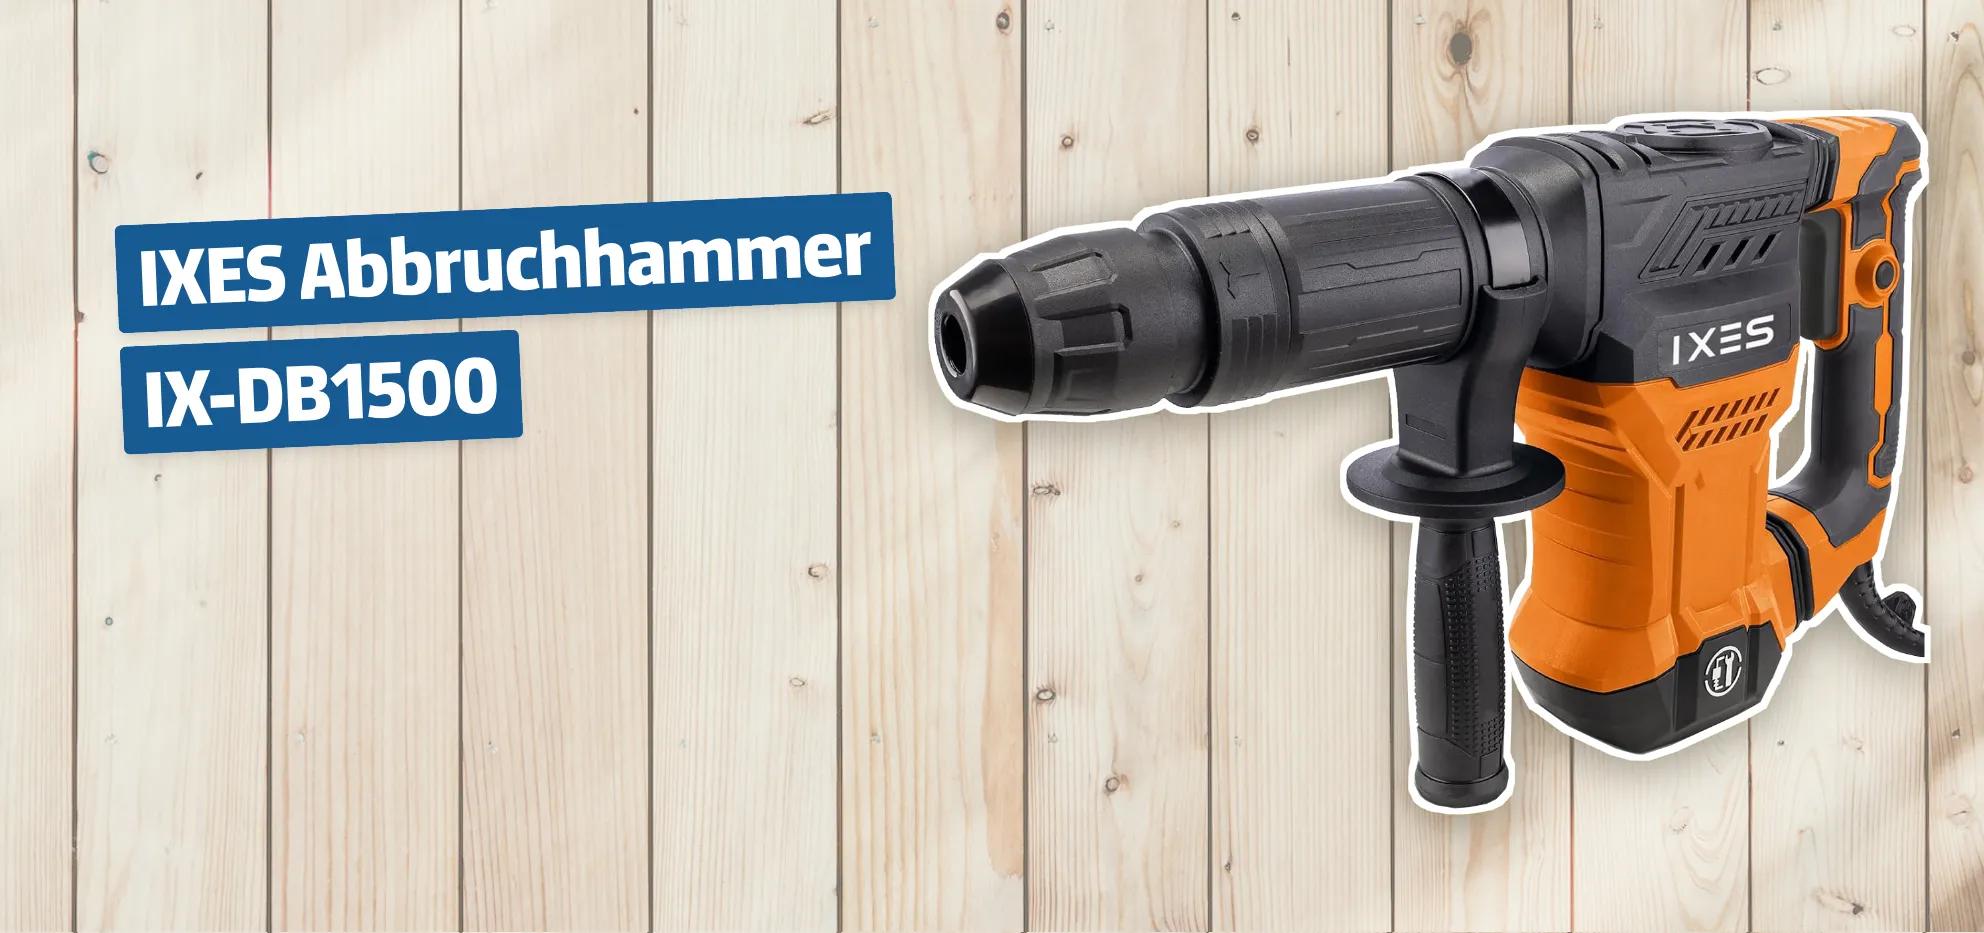 IXES Abbruchhammer IX-DB1500